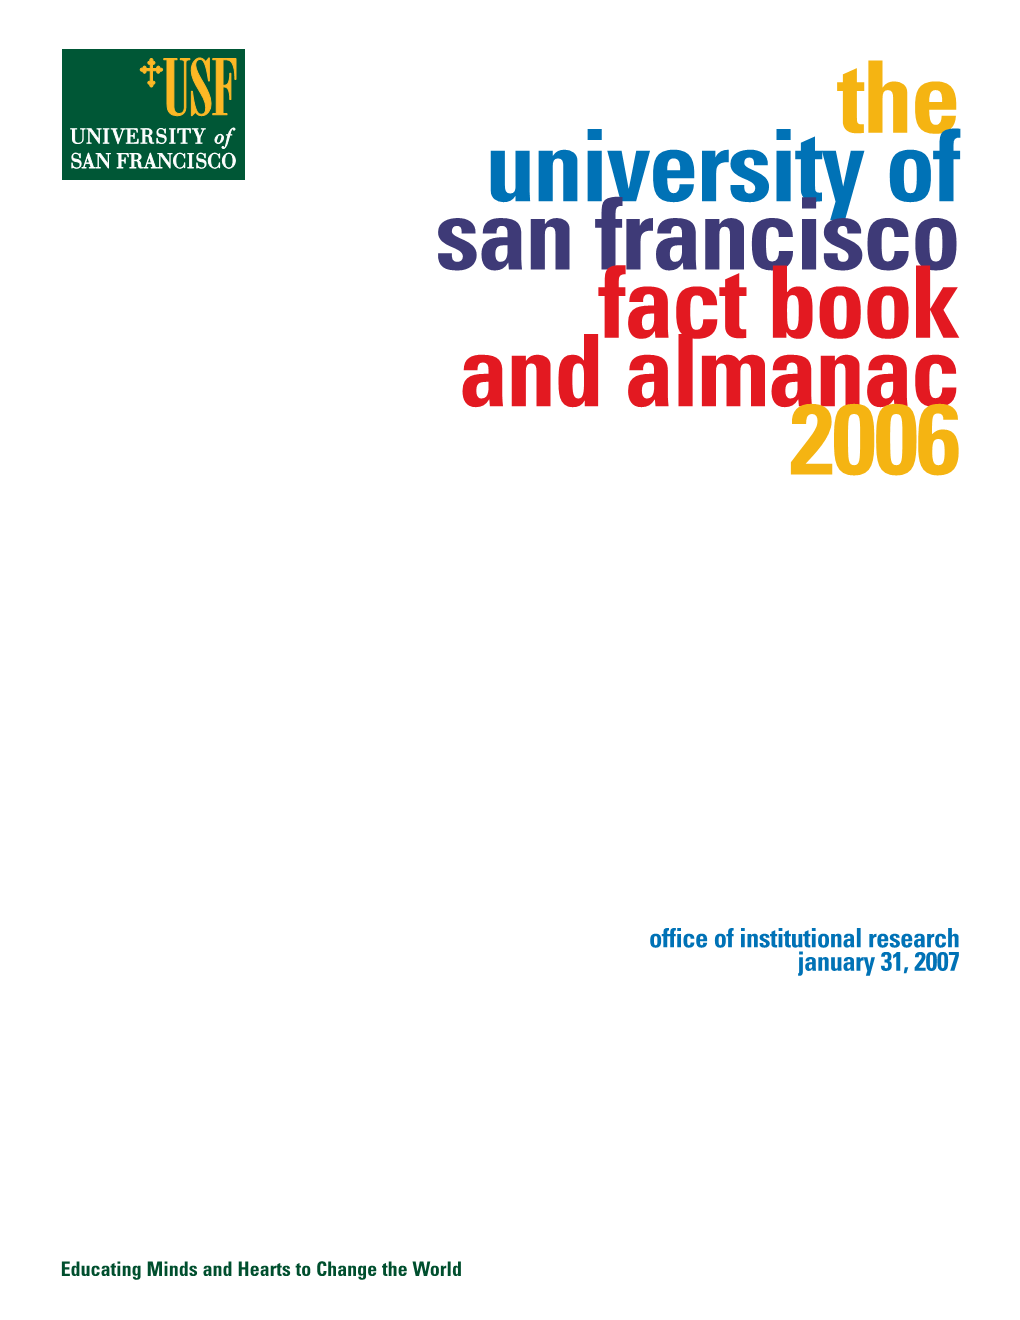 The University of San Francisco Fact Book and Almanac 2006